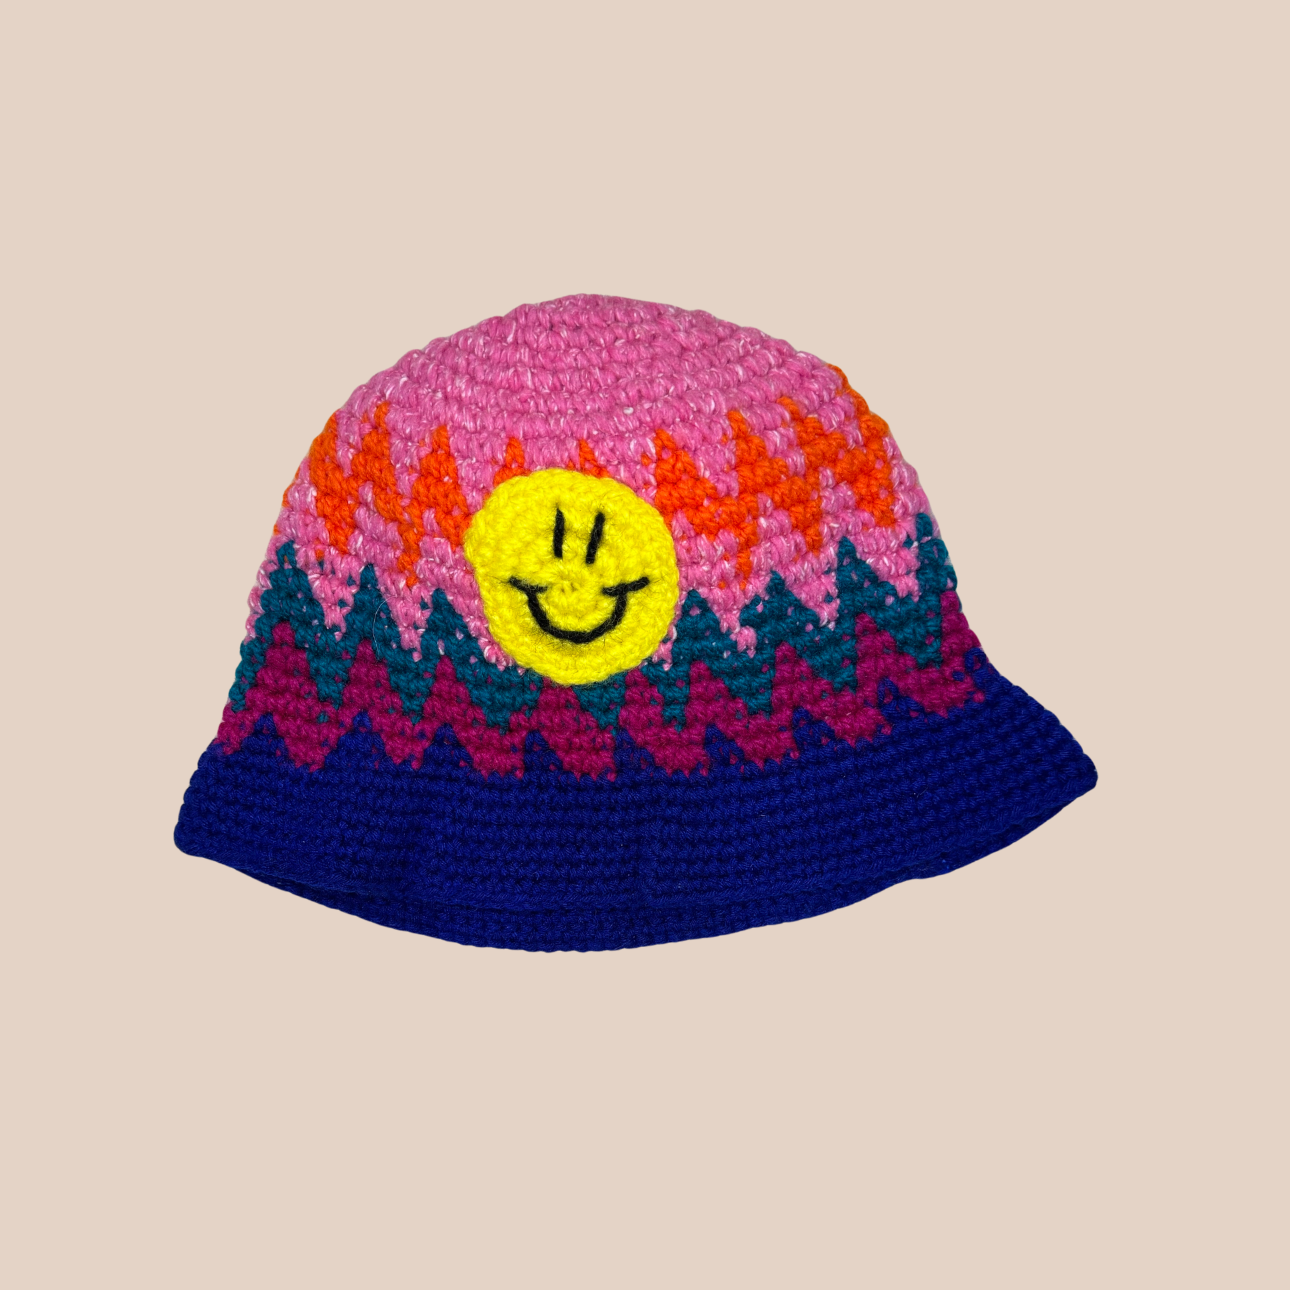 Image du bucket hat motif smiley de Maison Badigo, bucket hat (bob) multicolore unique et tendance